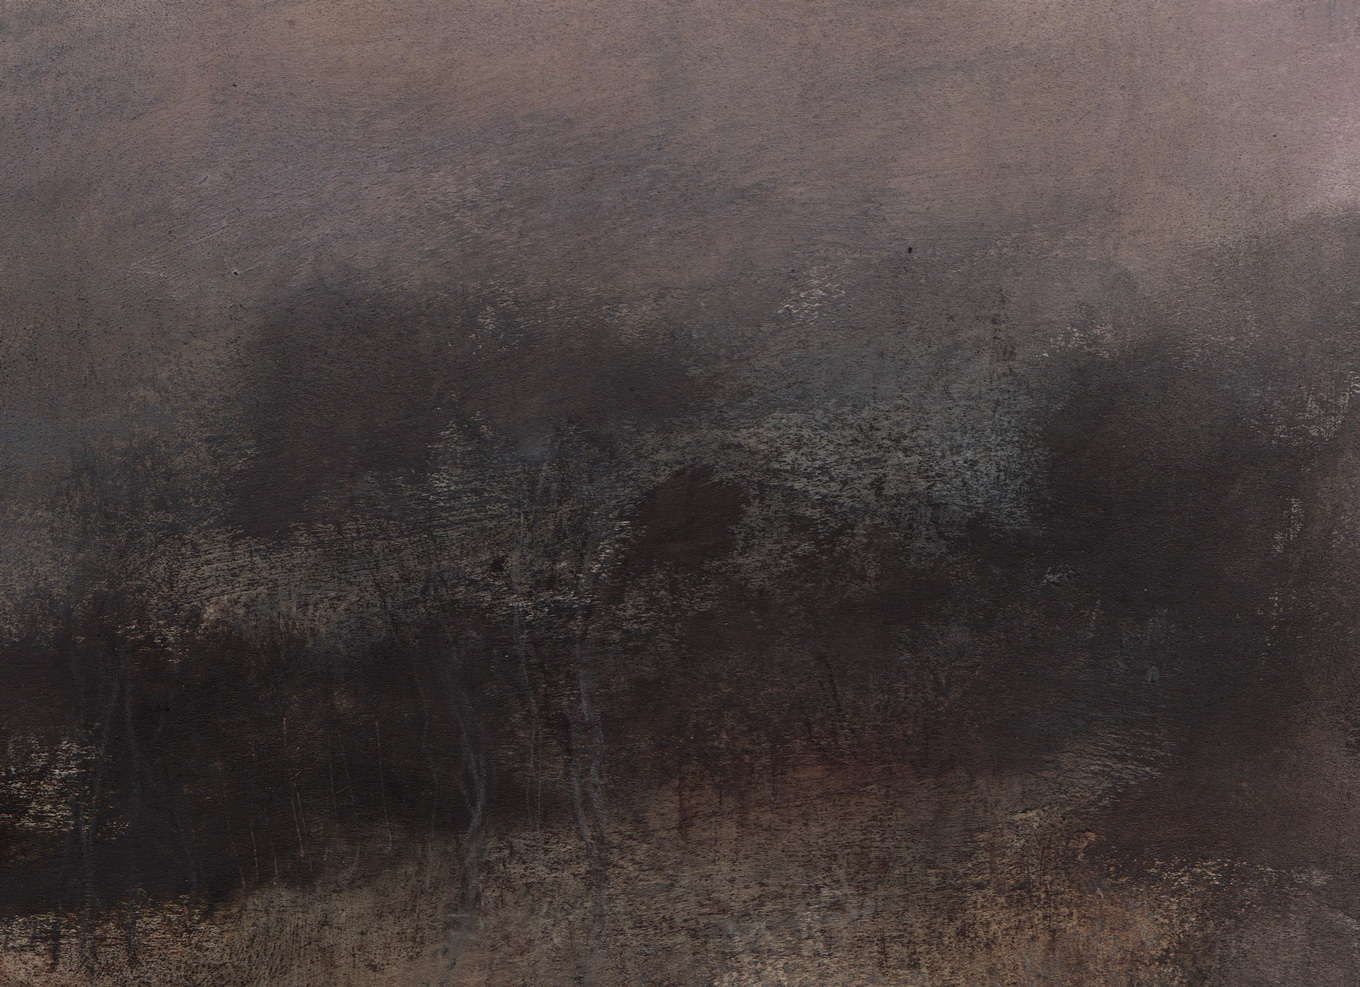 L1204 - Nicholas Herbert, British Artist, mixed media landscape painting of Chobham Common, mixed media on paper,2020